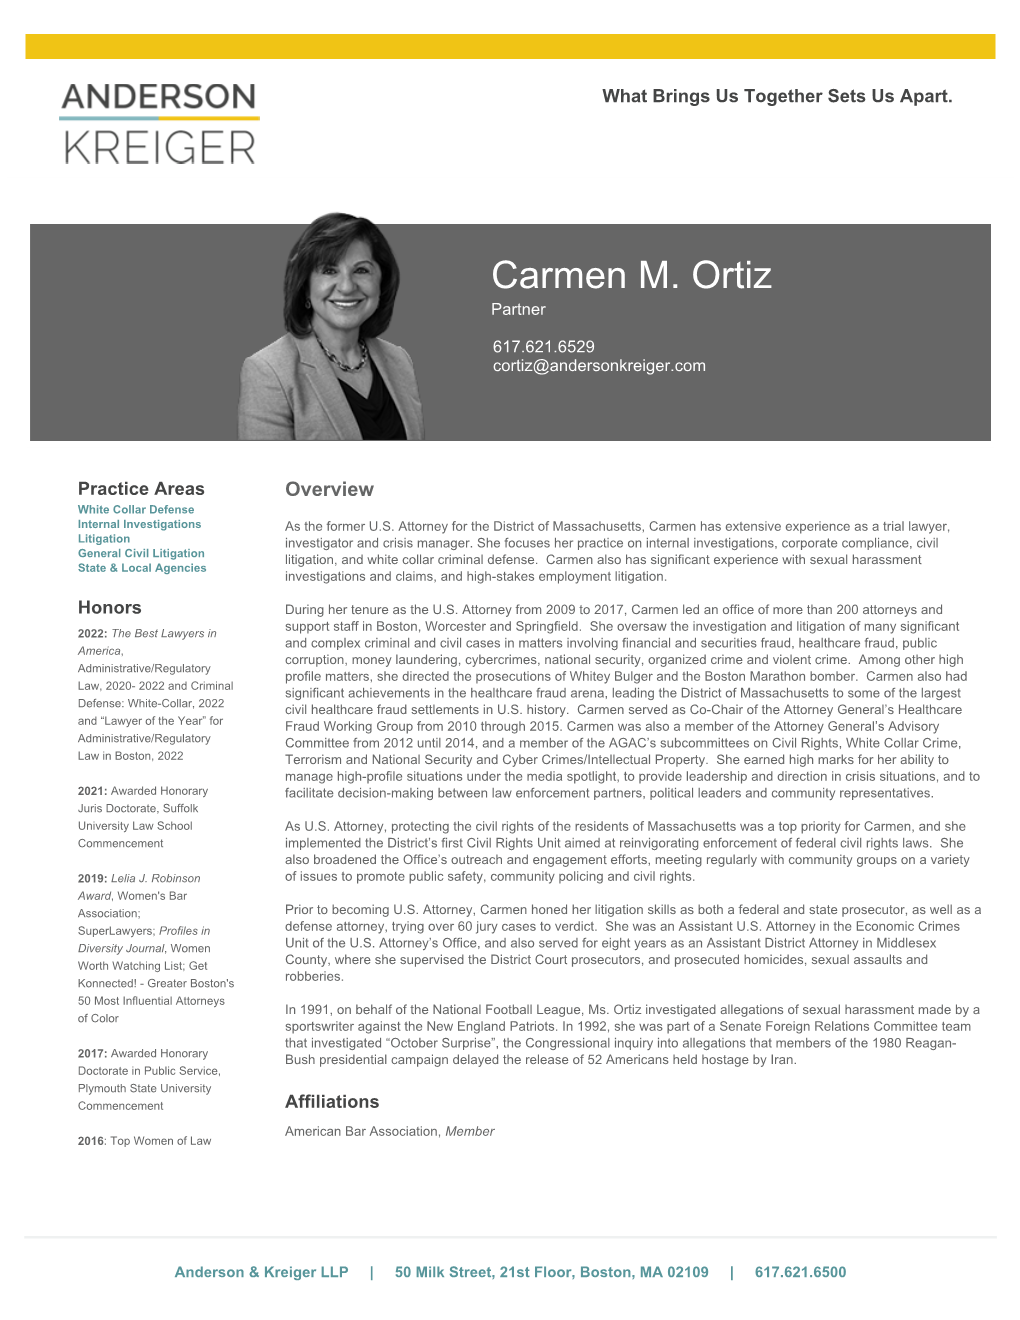 Carmen M. Ortiz Partner